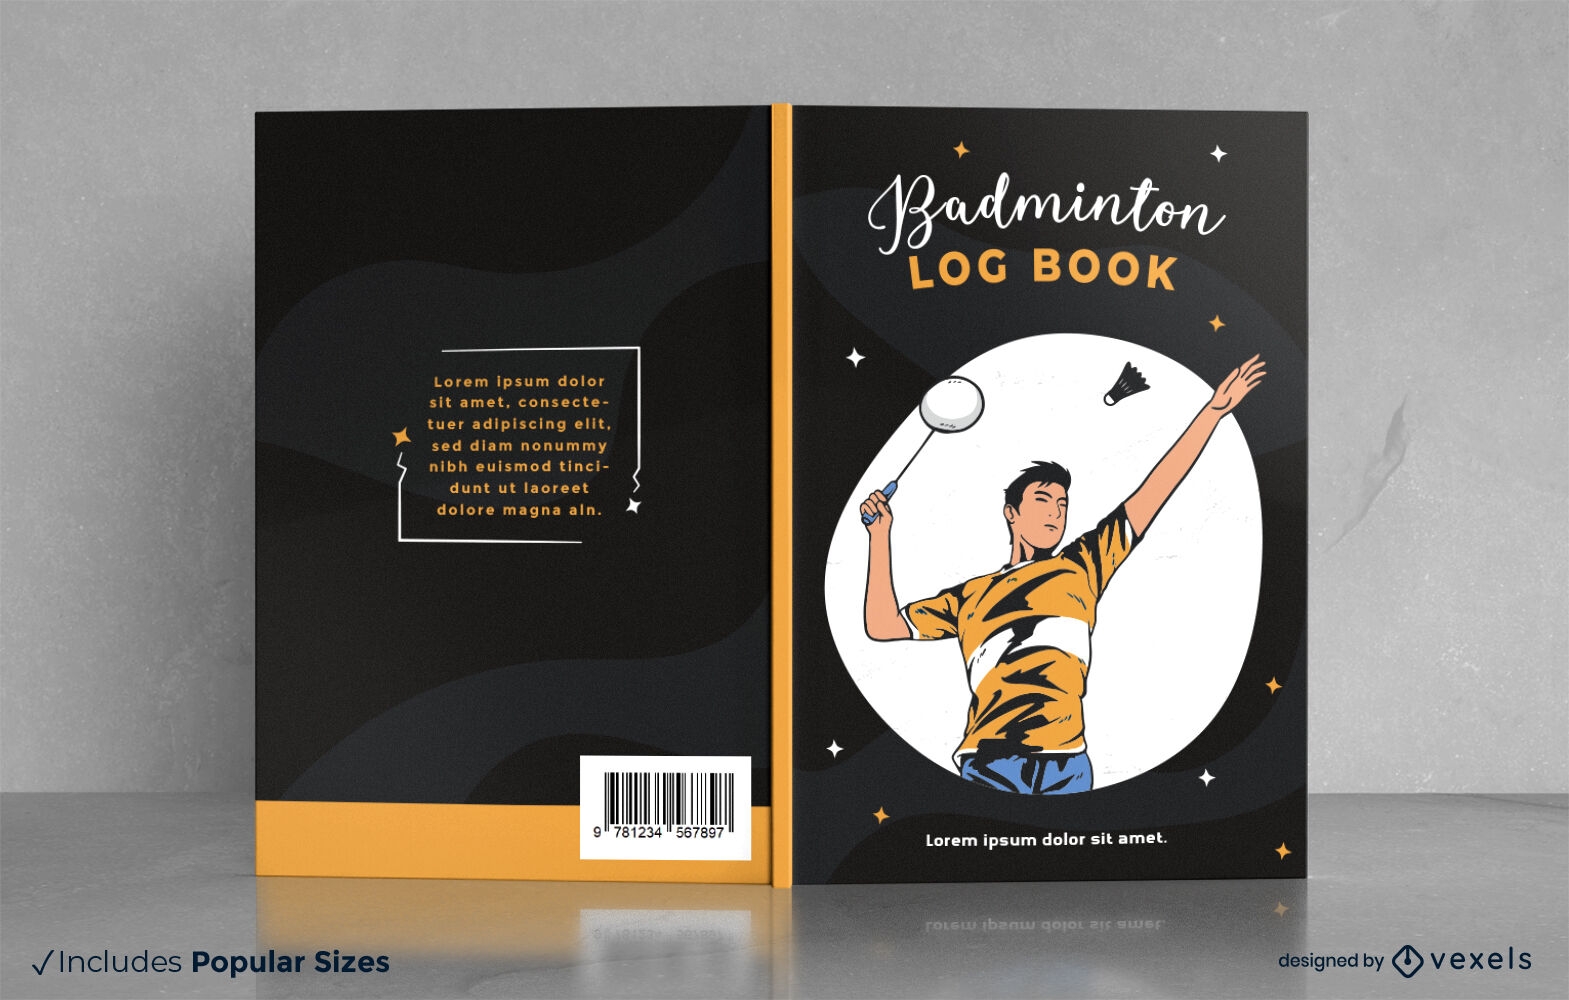 Badminton log book cover design